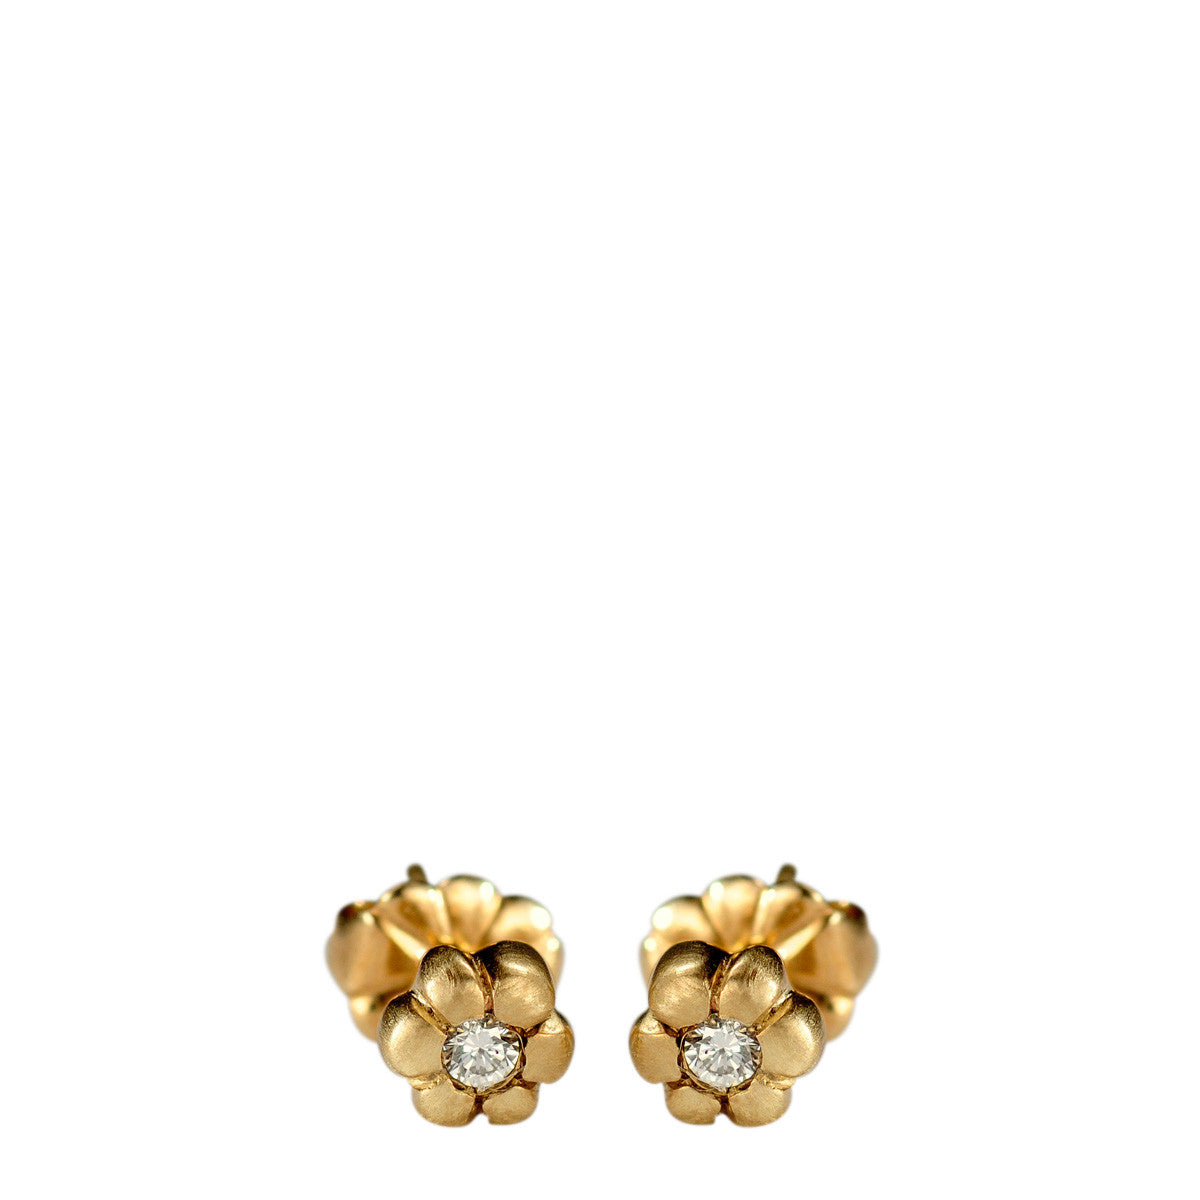 10K Gold Tiny Flower Stud Earrings with Diamonds